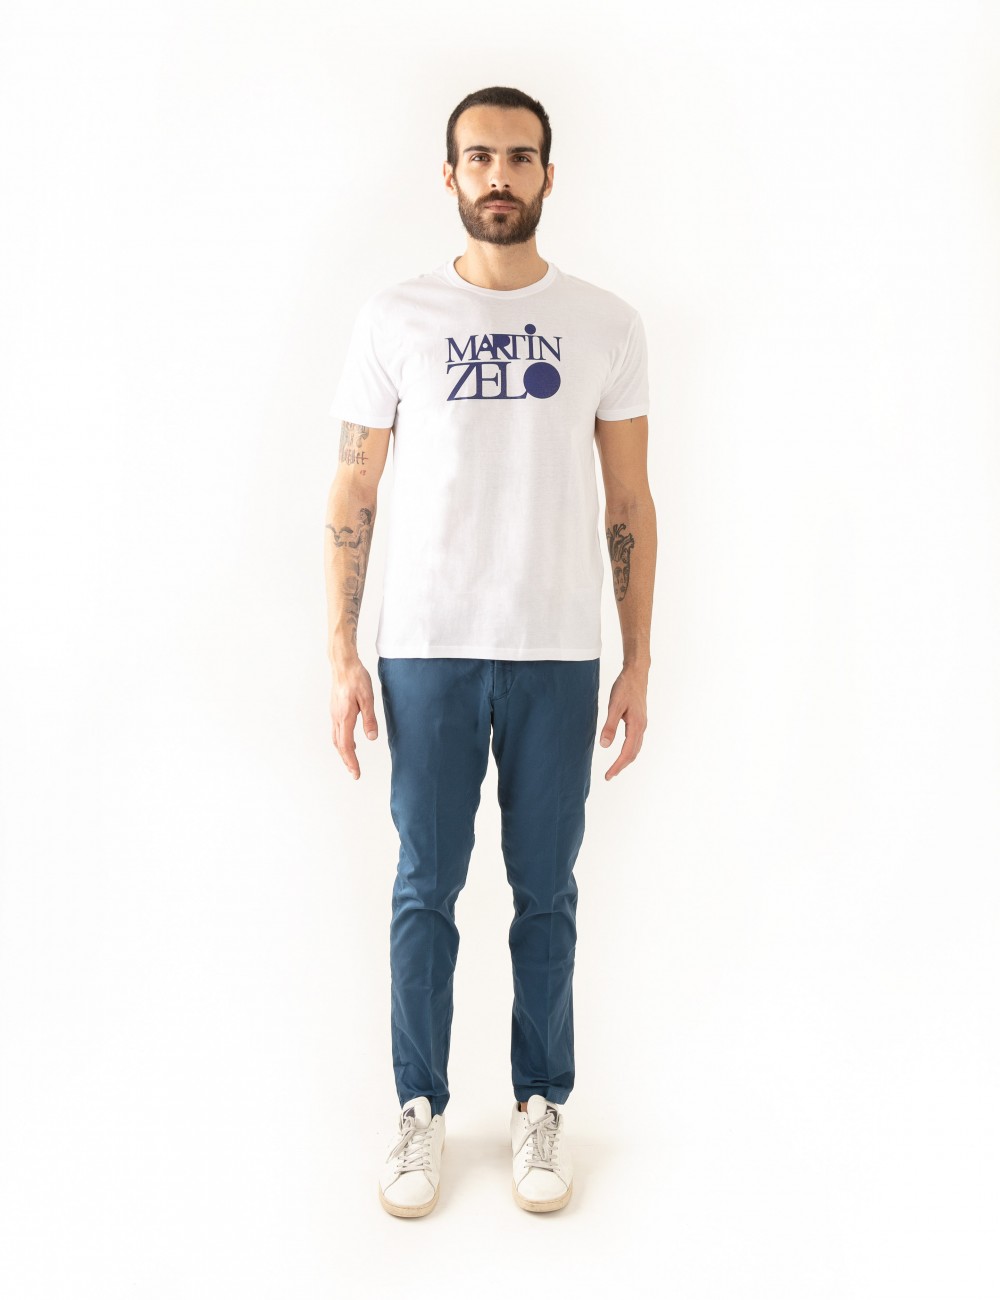 T-shirt "Zelo" stampa Martin Zelo in cotone indossata retro